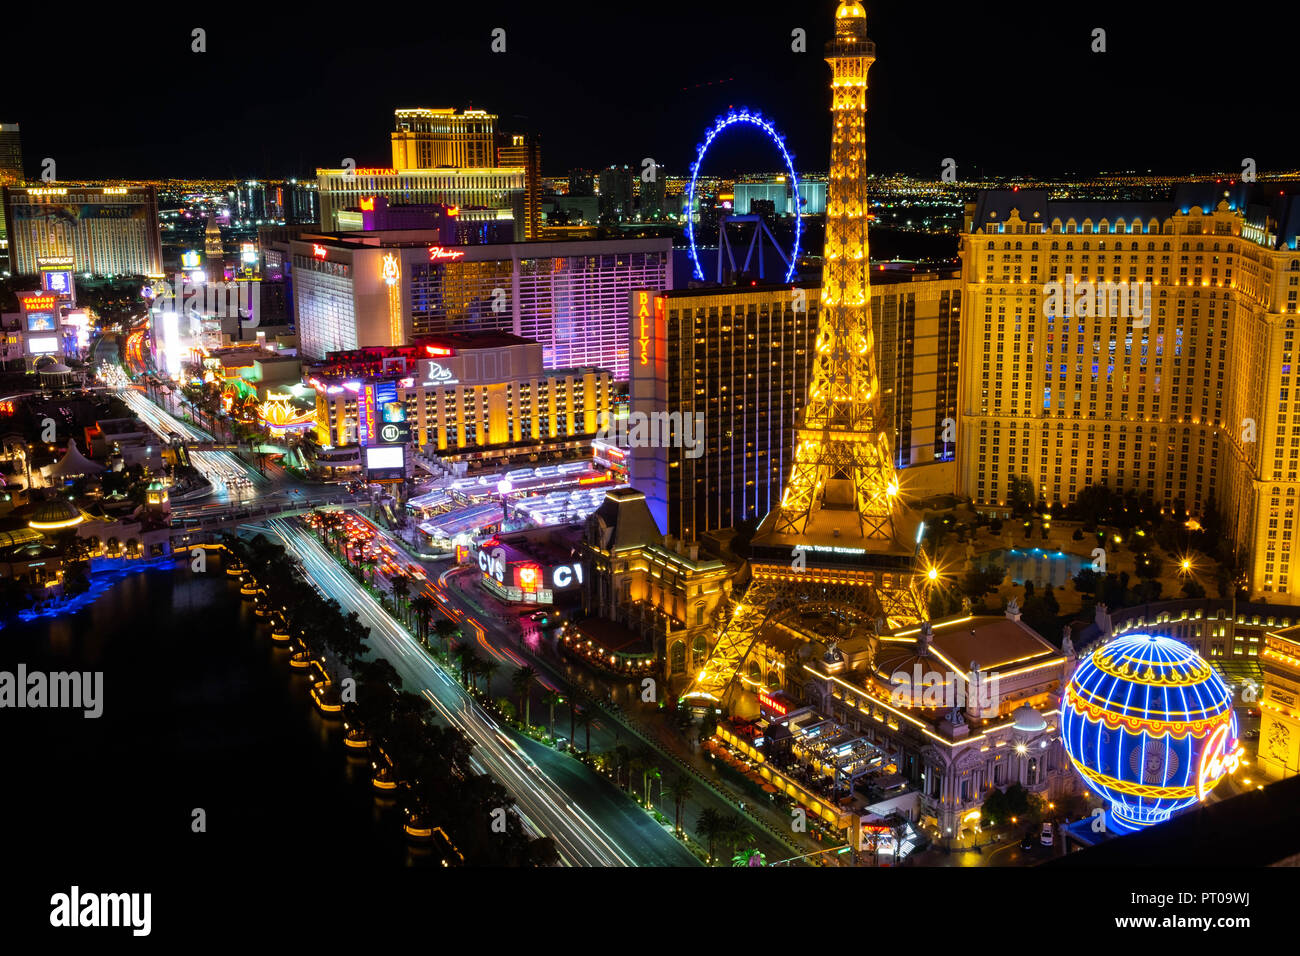 Il casinò e hotel di South Las Vegas Boulevard aka il Las Vegas Strip visto di notte Foto Stock